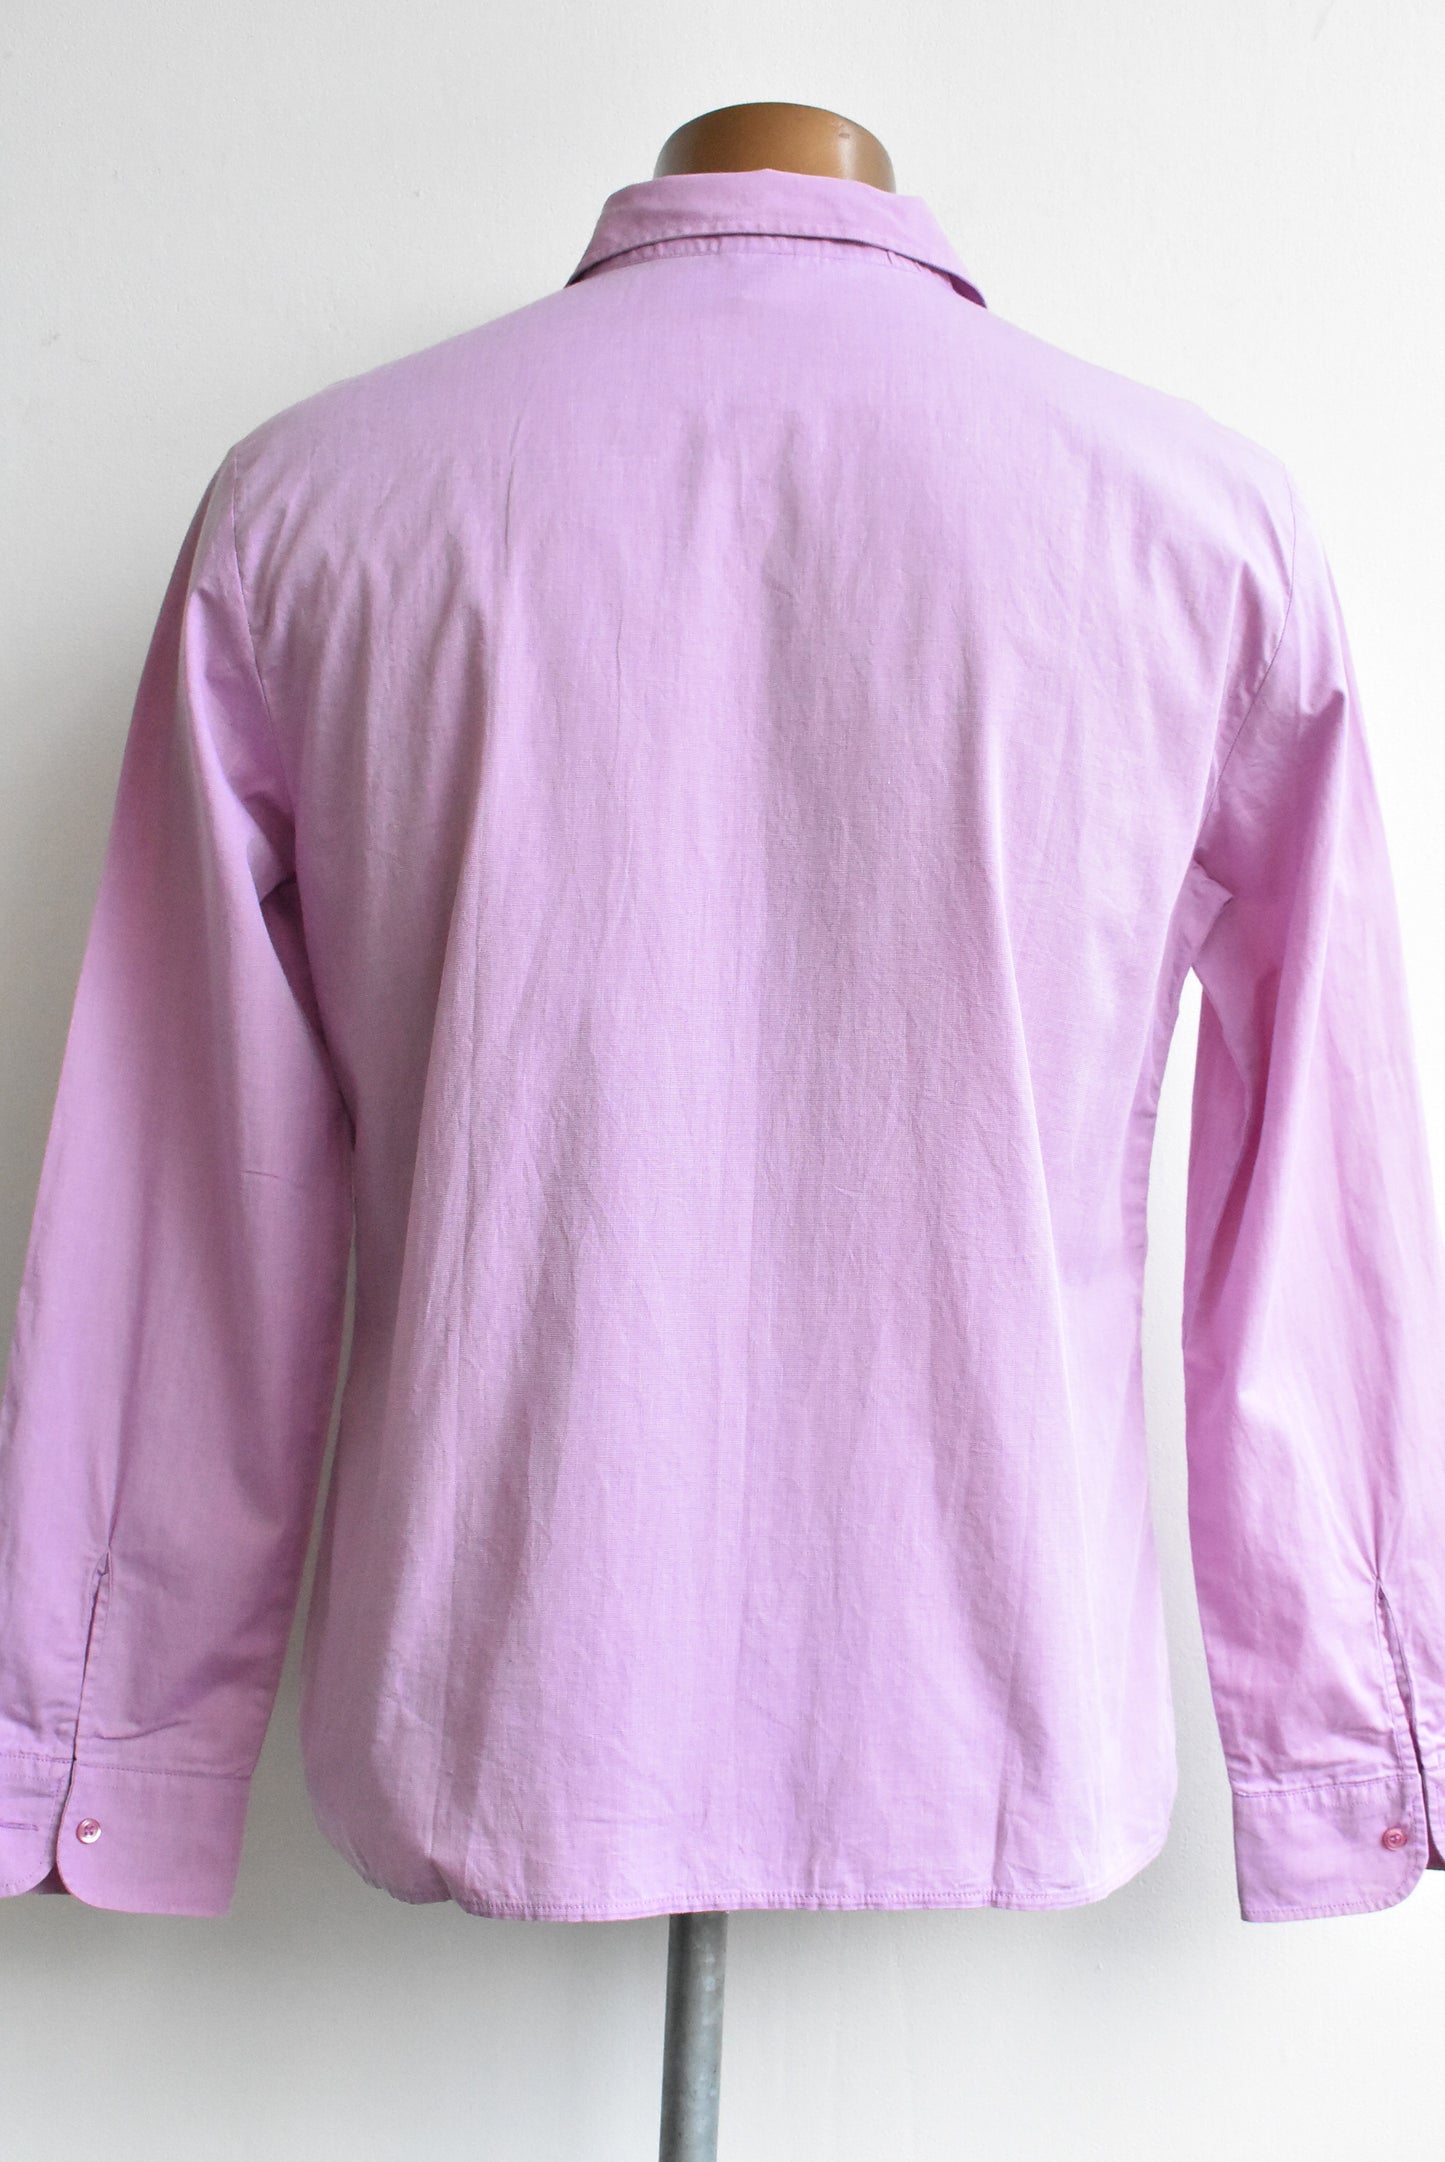 United Colors of Benetton, purple cotton button up mens shirt, S